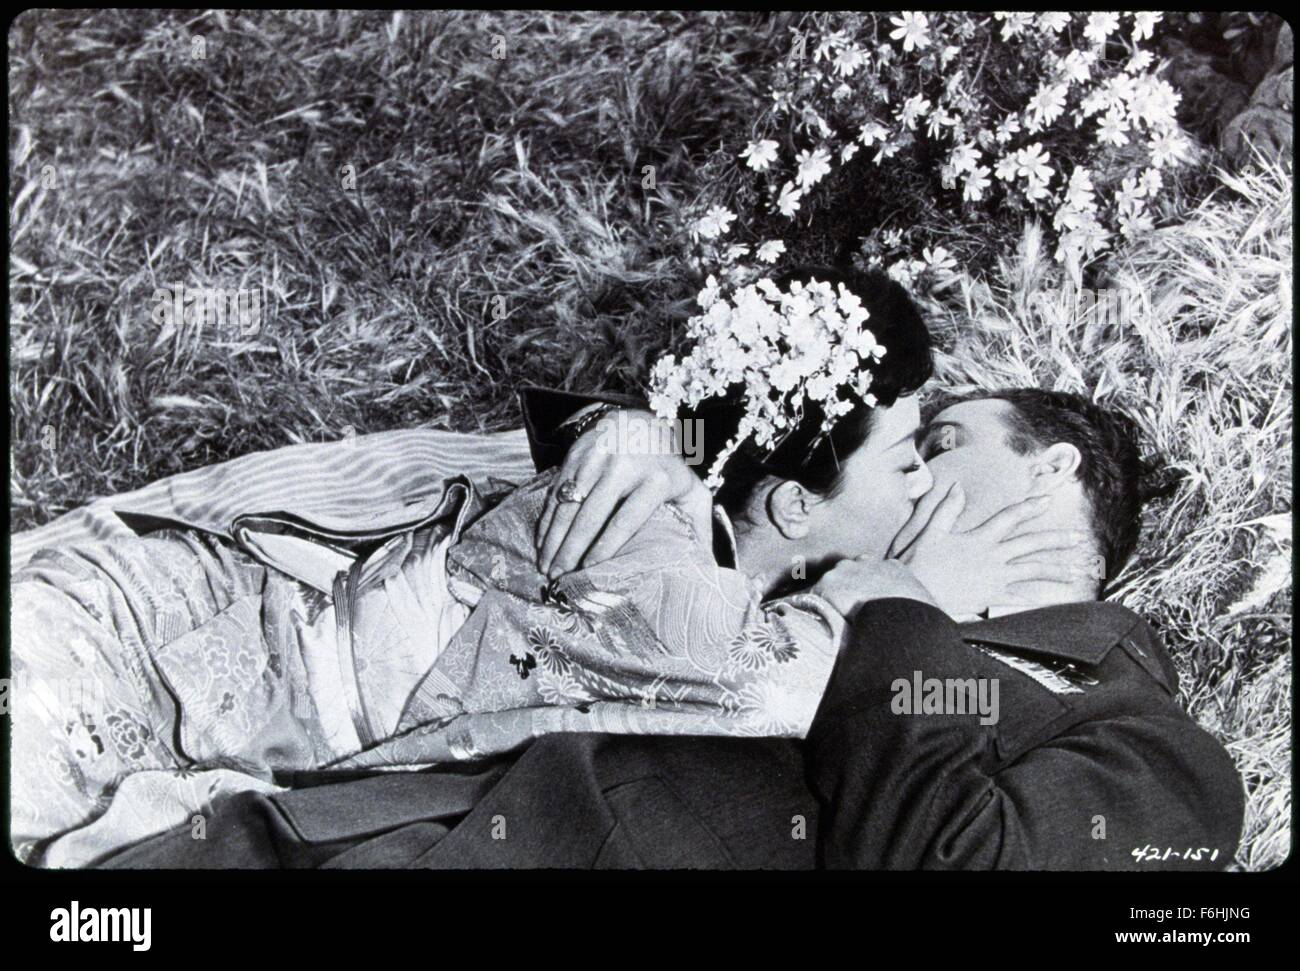 1957, Film Title: SAYONARA, Director: JOSHUA LOGAN, Pictured: MARLON BRANDO, EMBRACE, KISSING, JOSHUA LOGAN, ROMANCE. (Credit Image: SNAP) Stock Photo